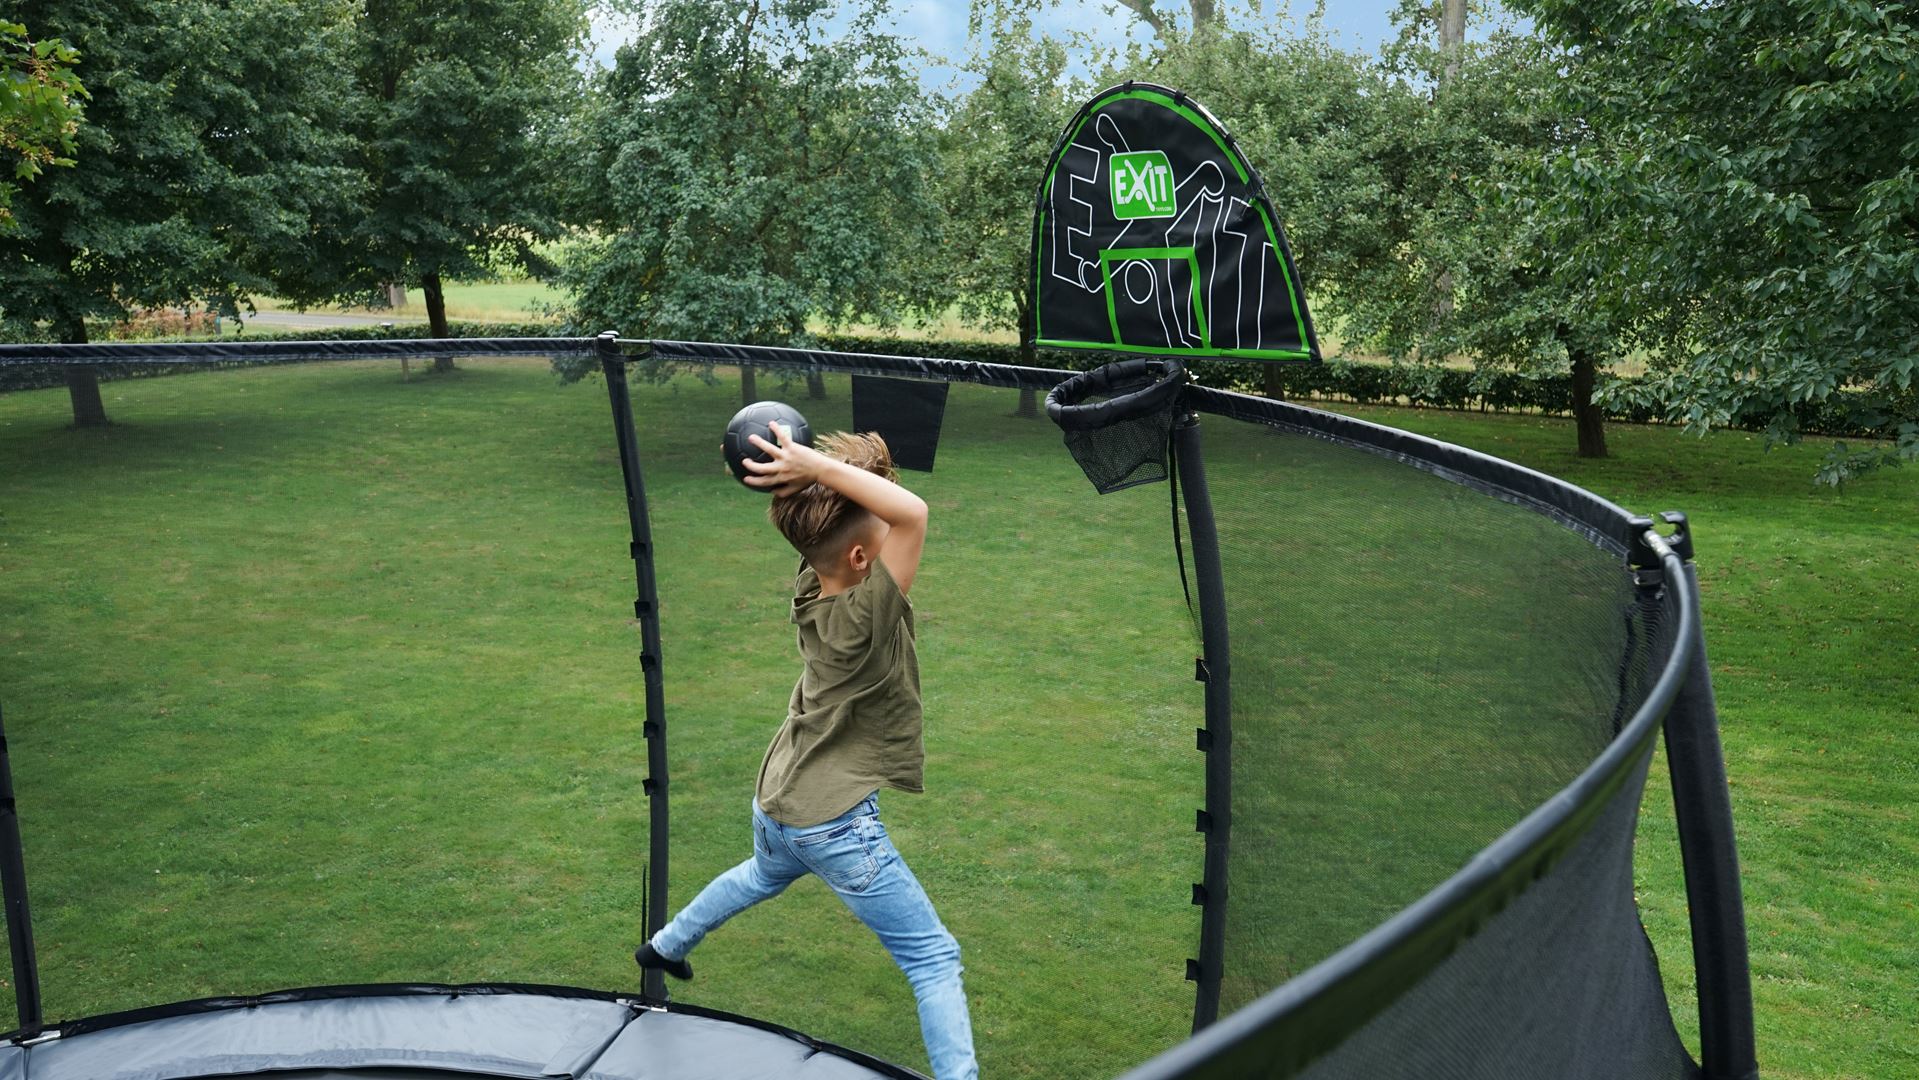 EXIT-trampoline-basket-25-38mm-groen-zwart